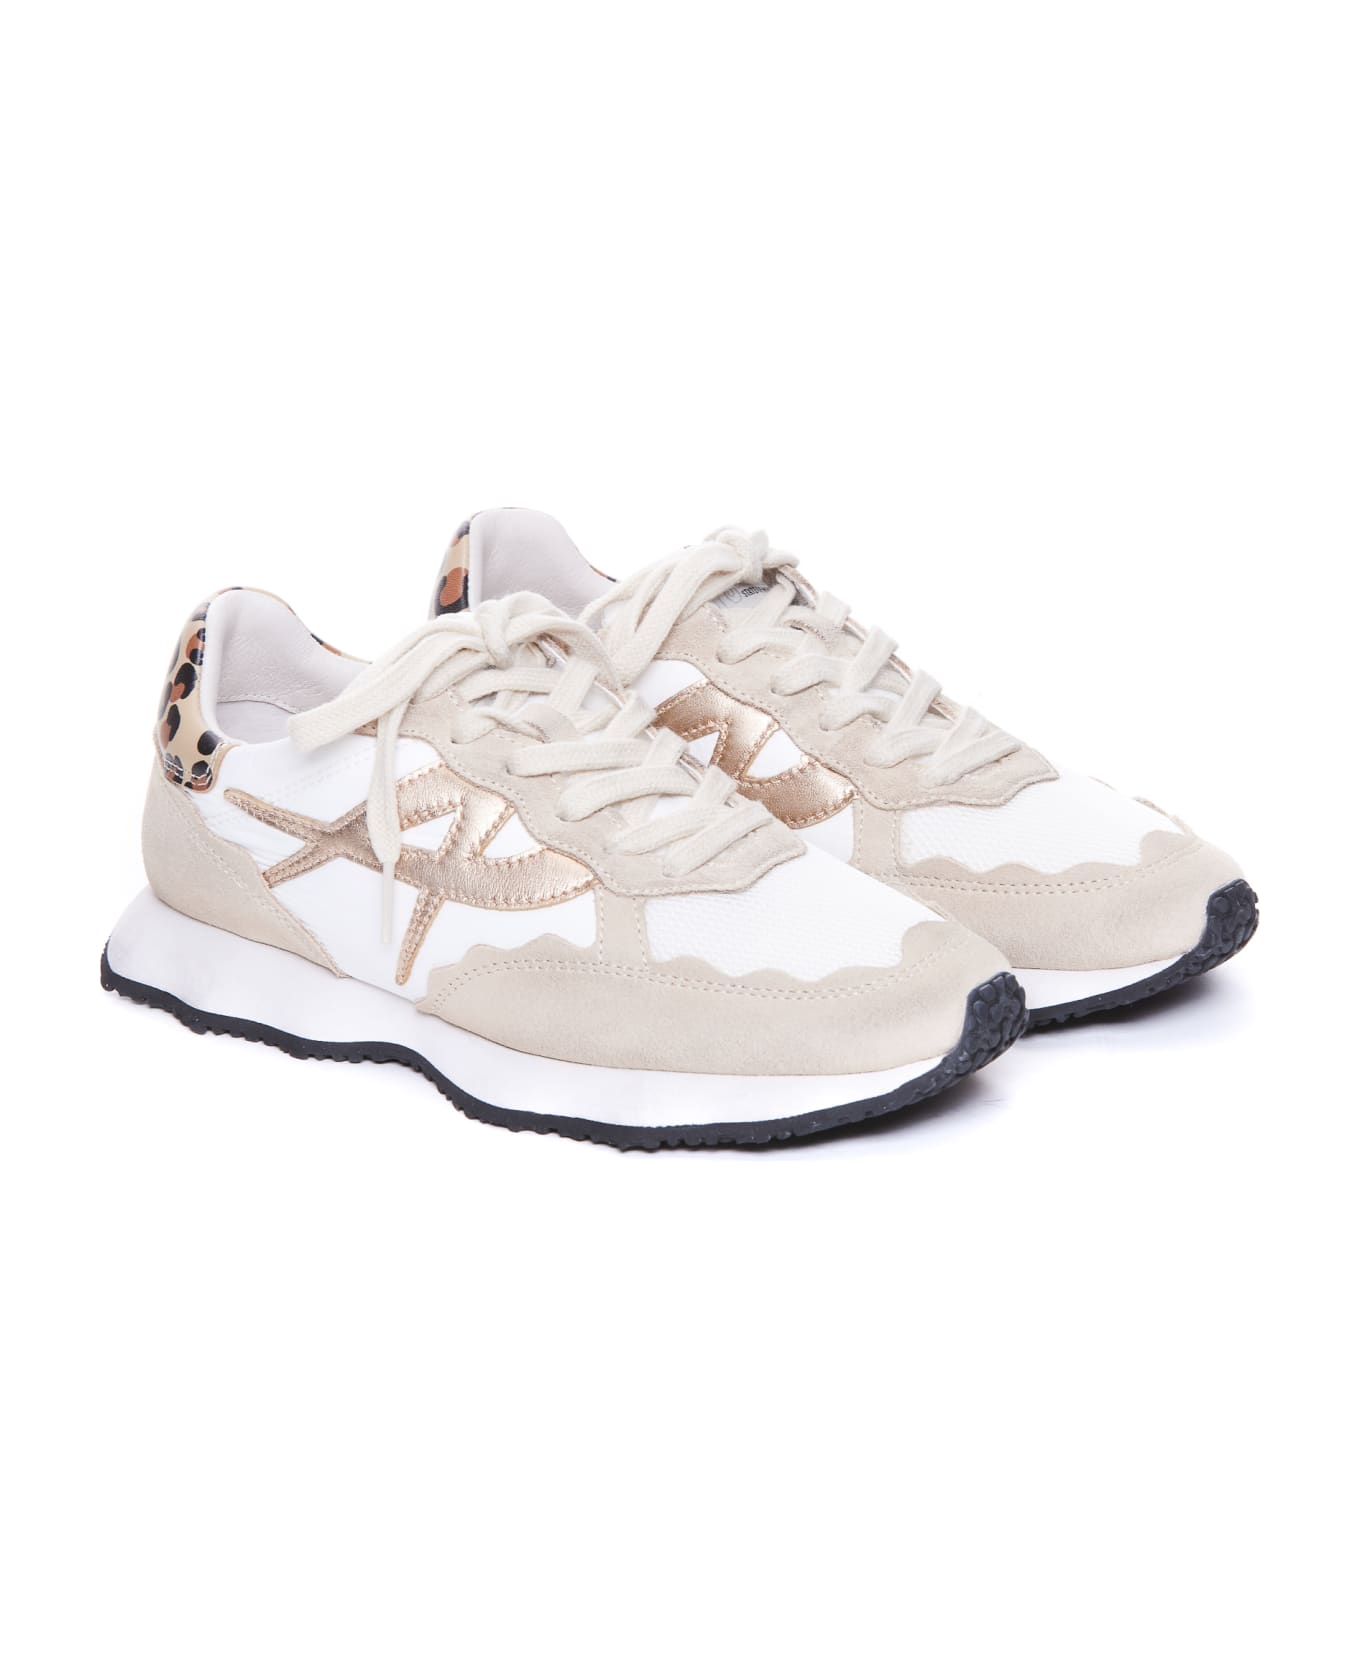 Ash Sunstar Sneakers - White